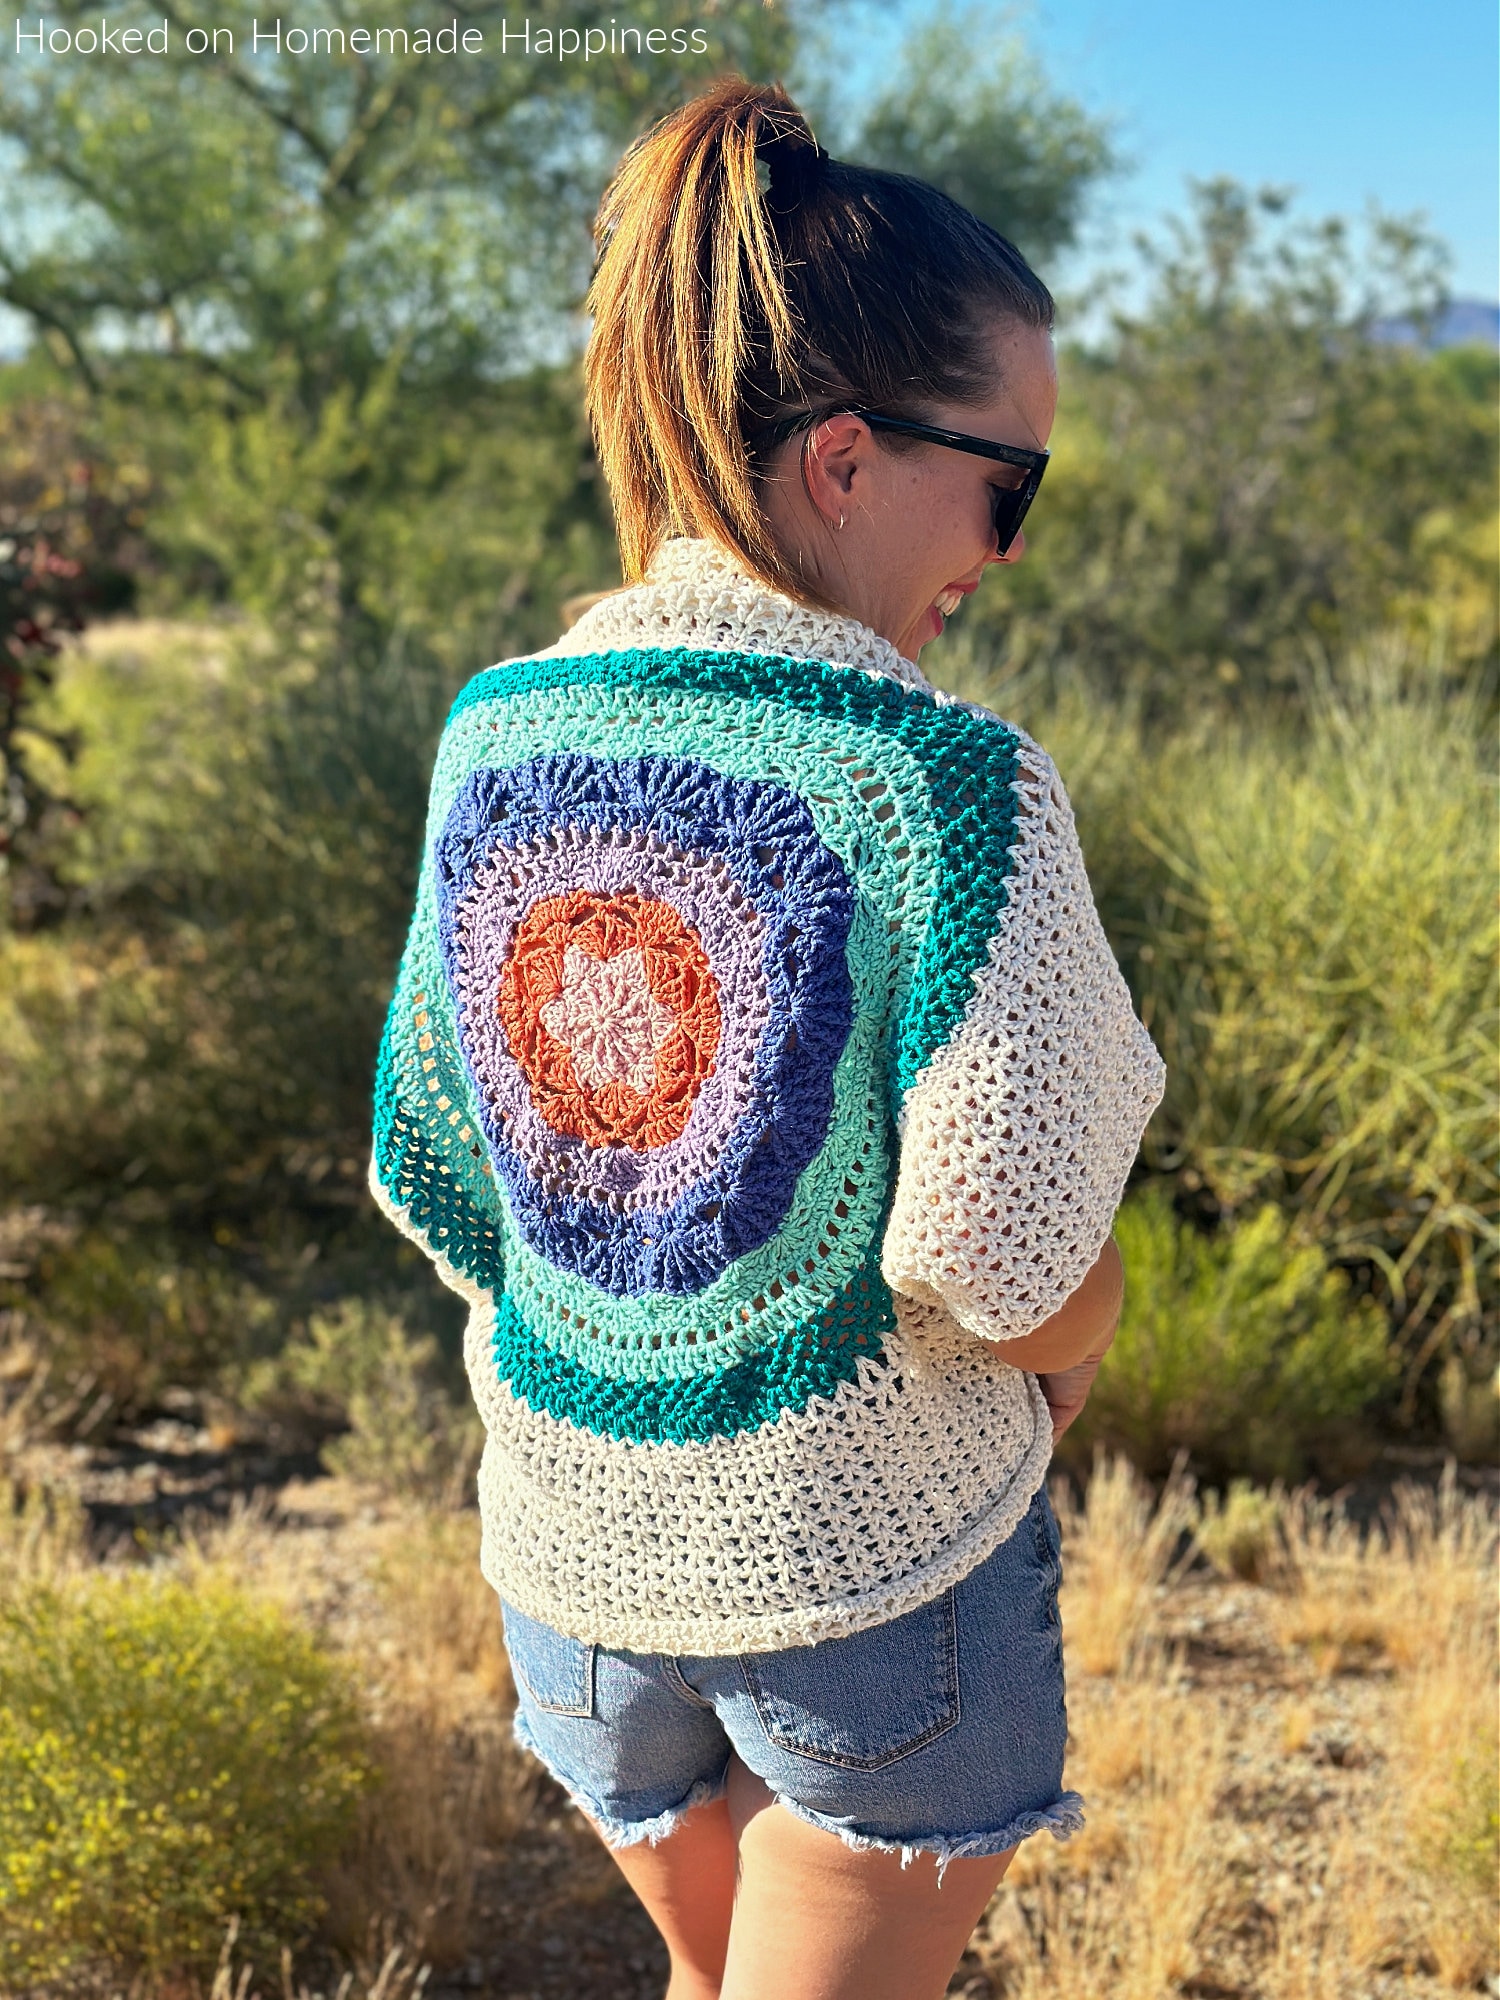 Desert Landscape Wrap Crochet Pattern - Hooked on Homemade Happiness